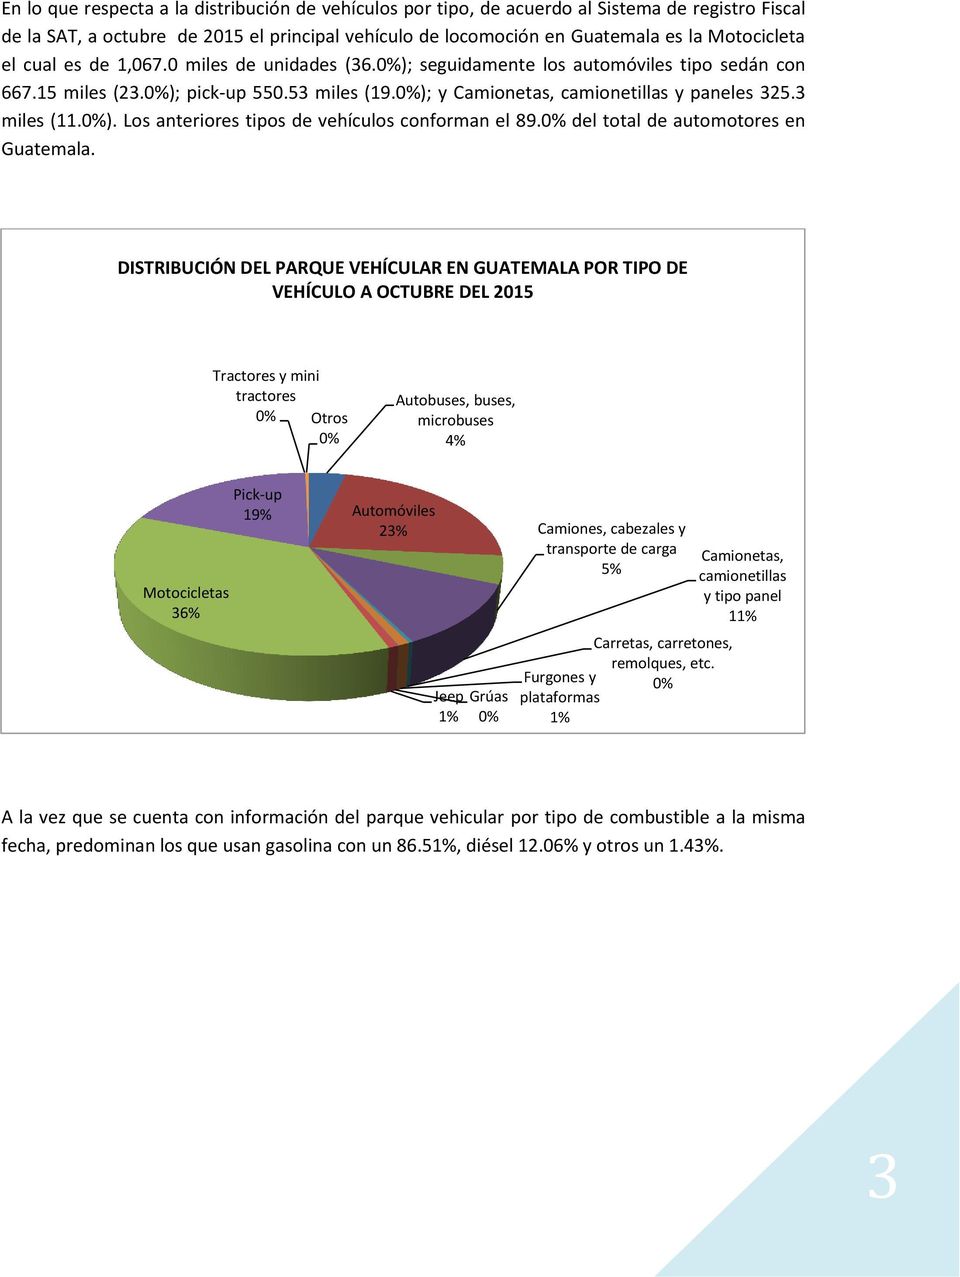 0% del total de automotores en Guatemala.